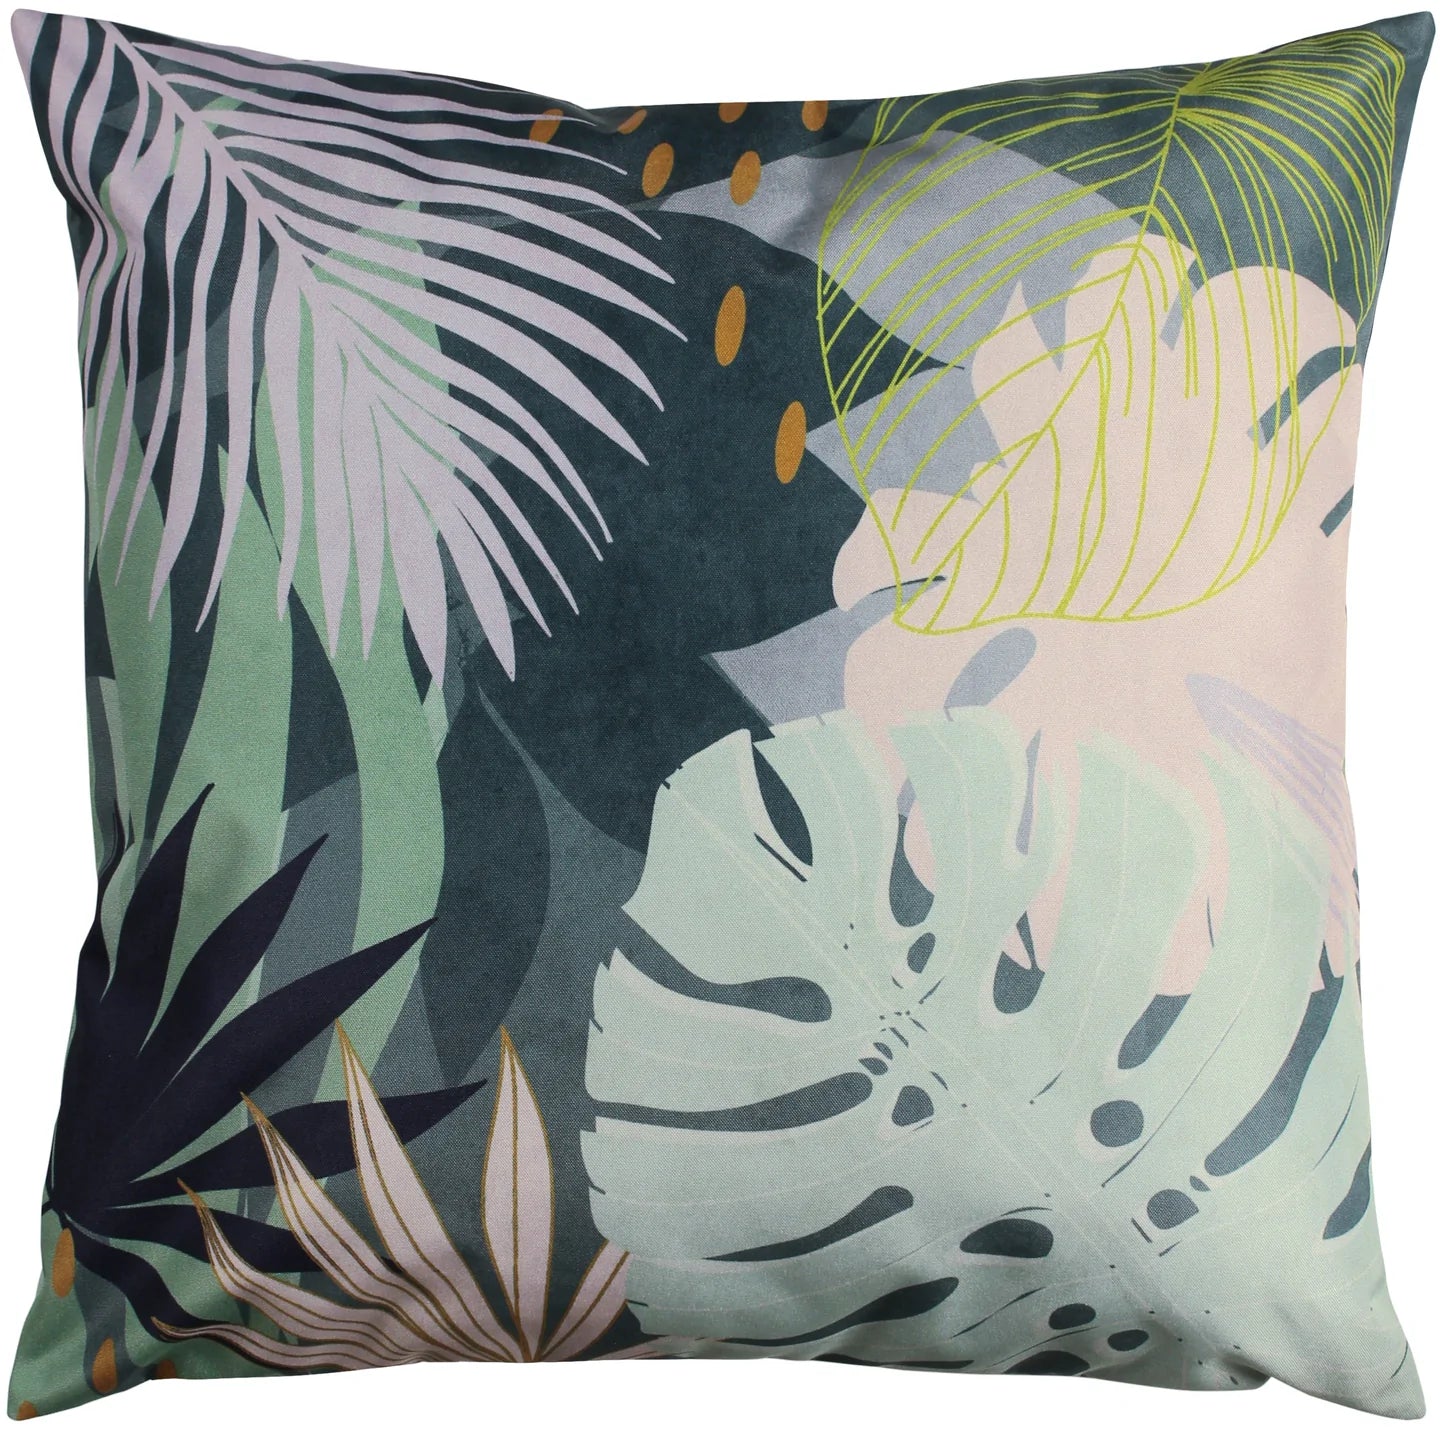 Decorative Outdoor Cushion "Leafy"